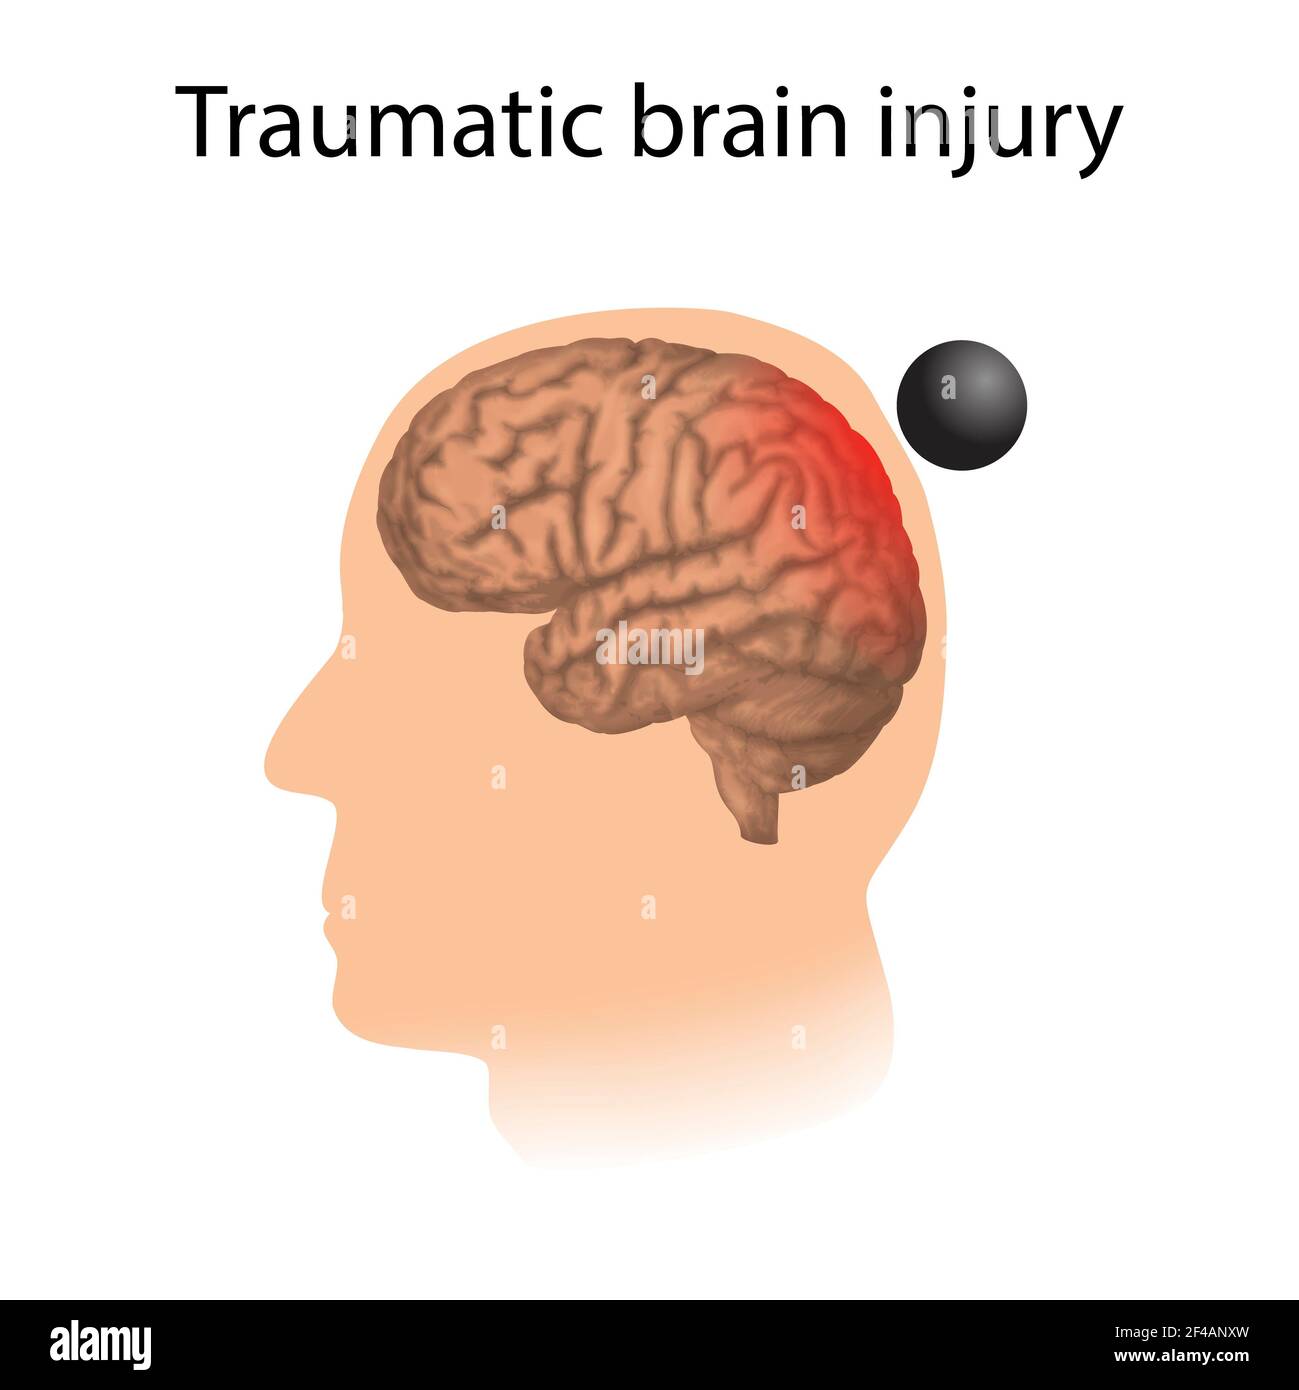 Traumatic brain injury, illustration Stock Photo